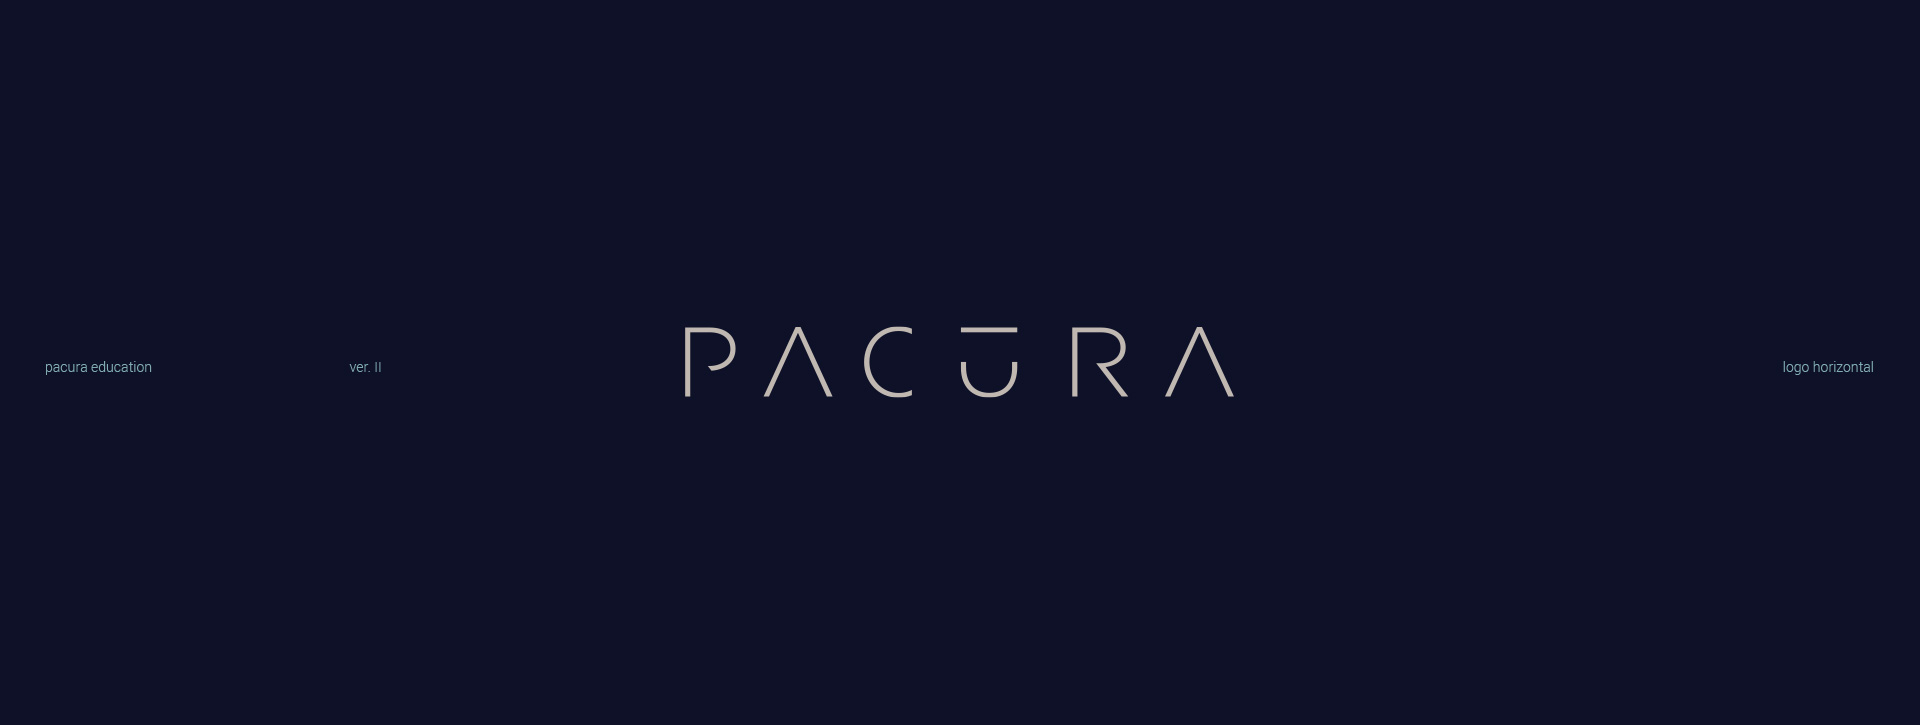 pacura, whis, branding, agency, krystian kulesza, logo, design